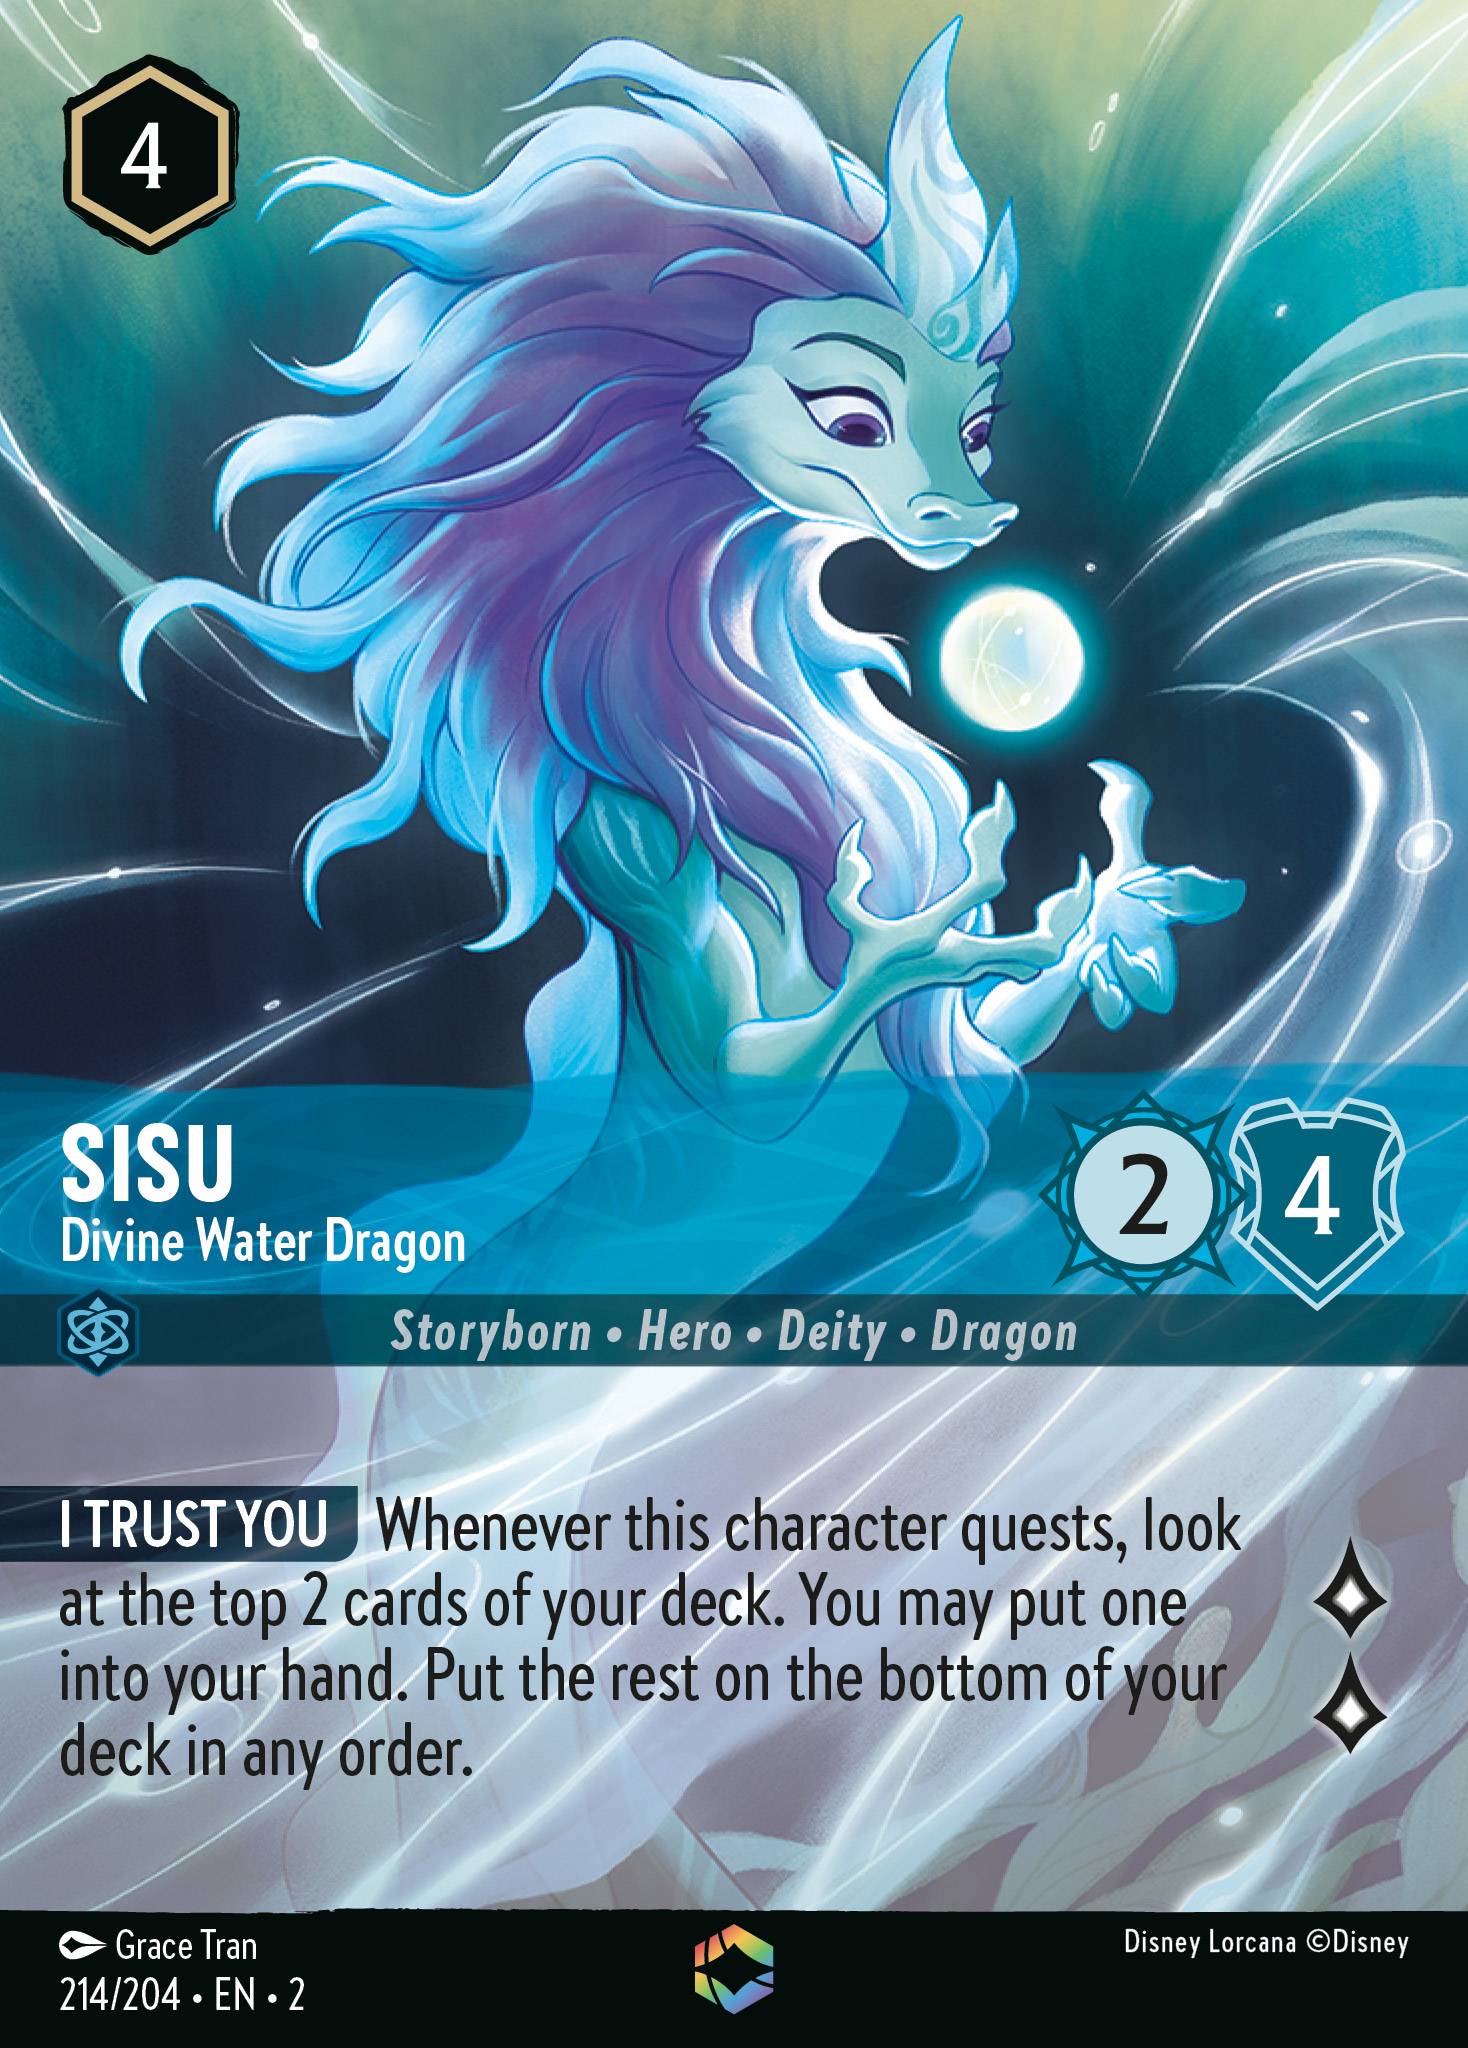 Sisu - Divine Water Dragon ROTF enchanted